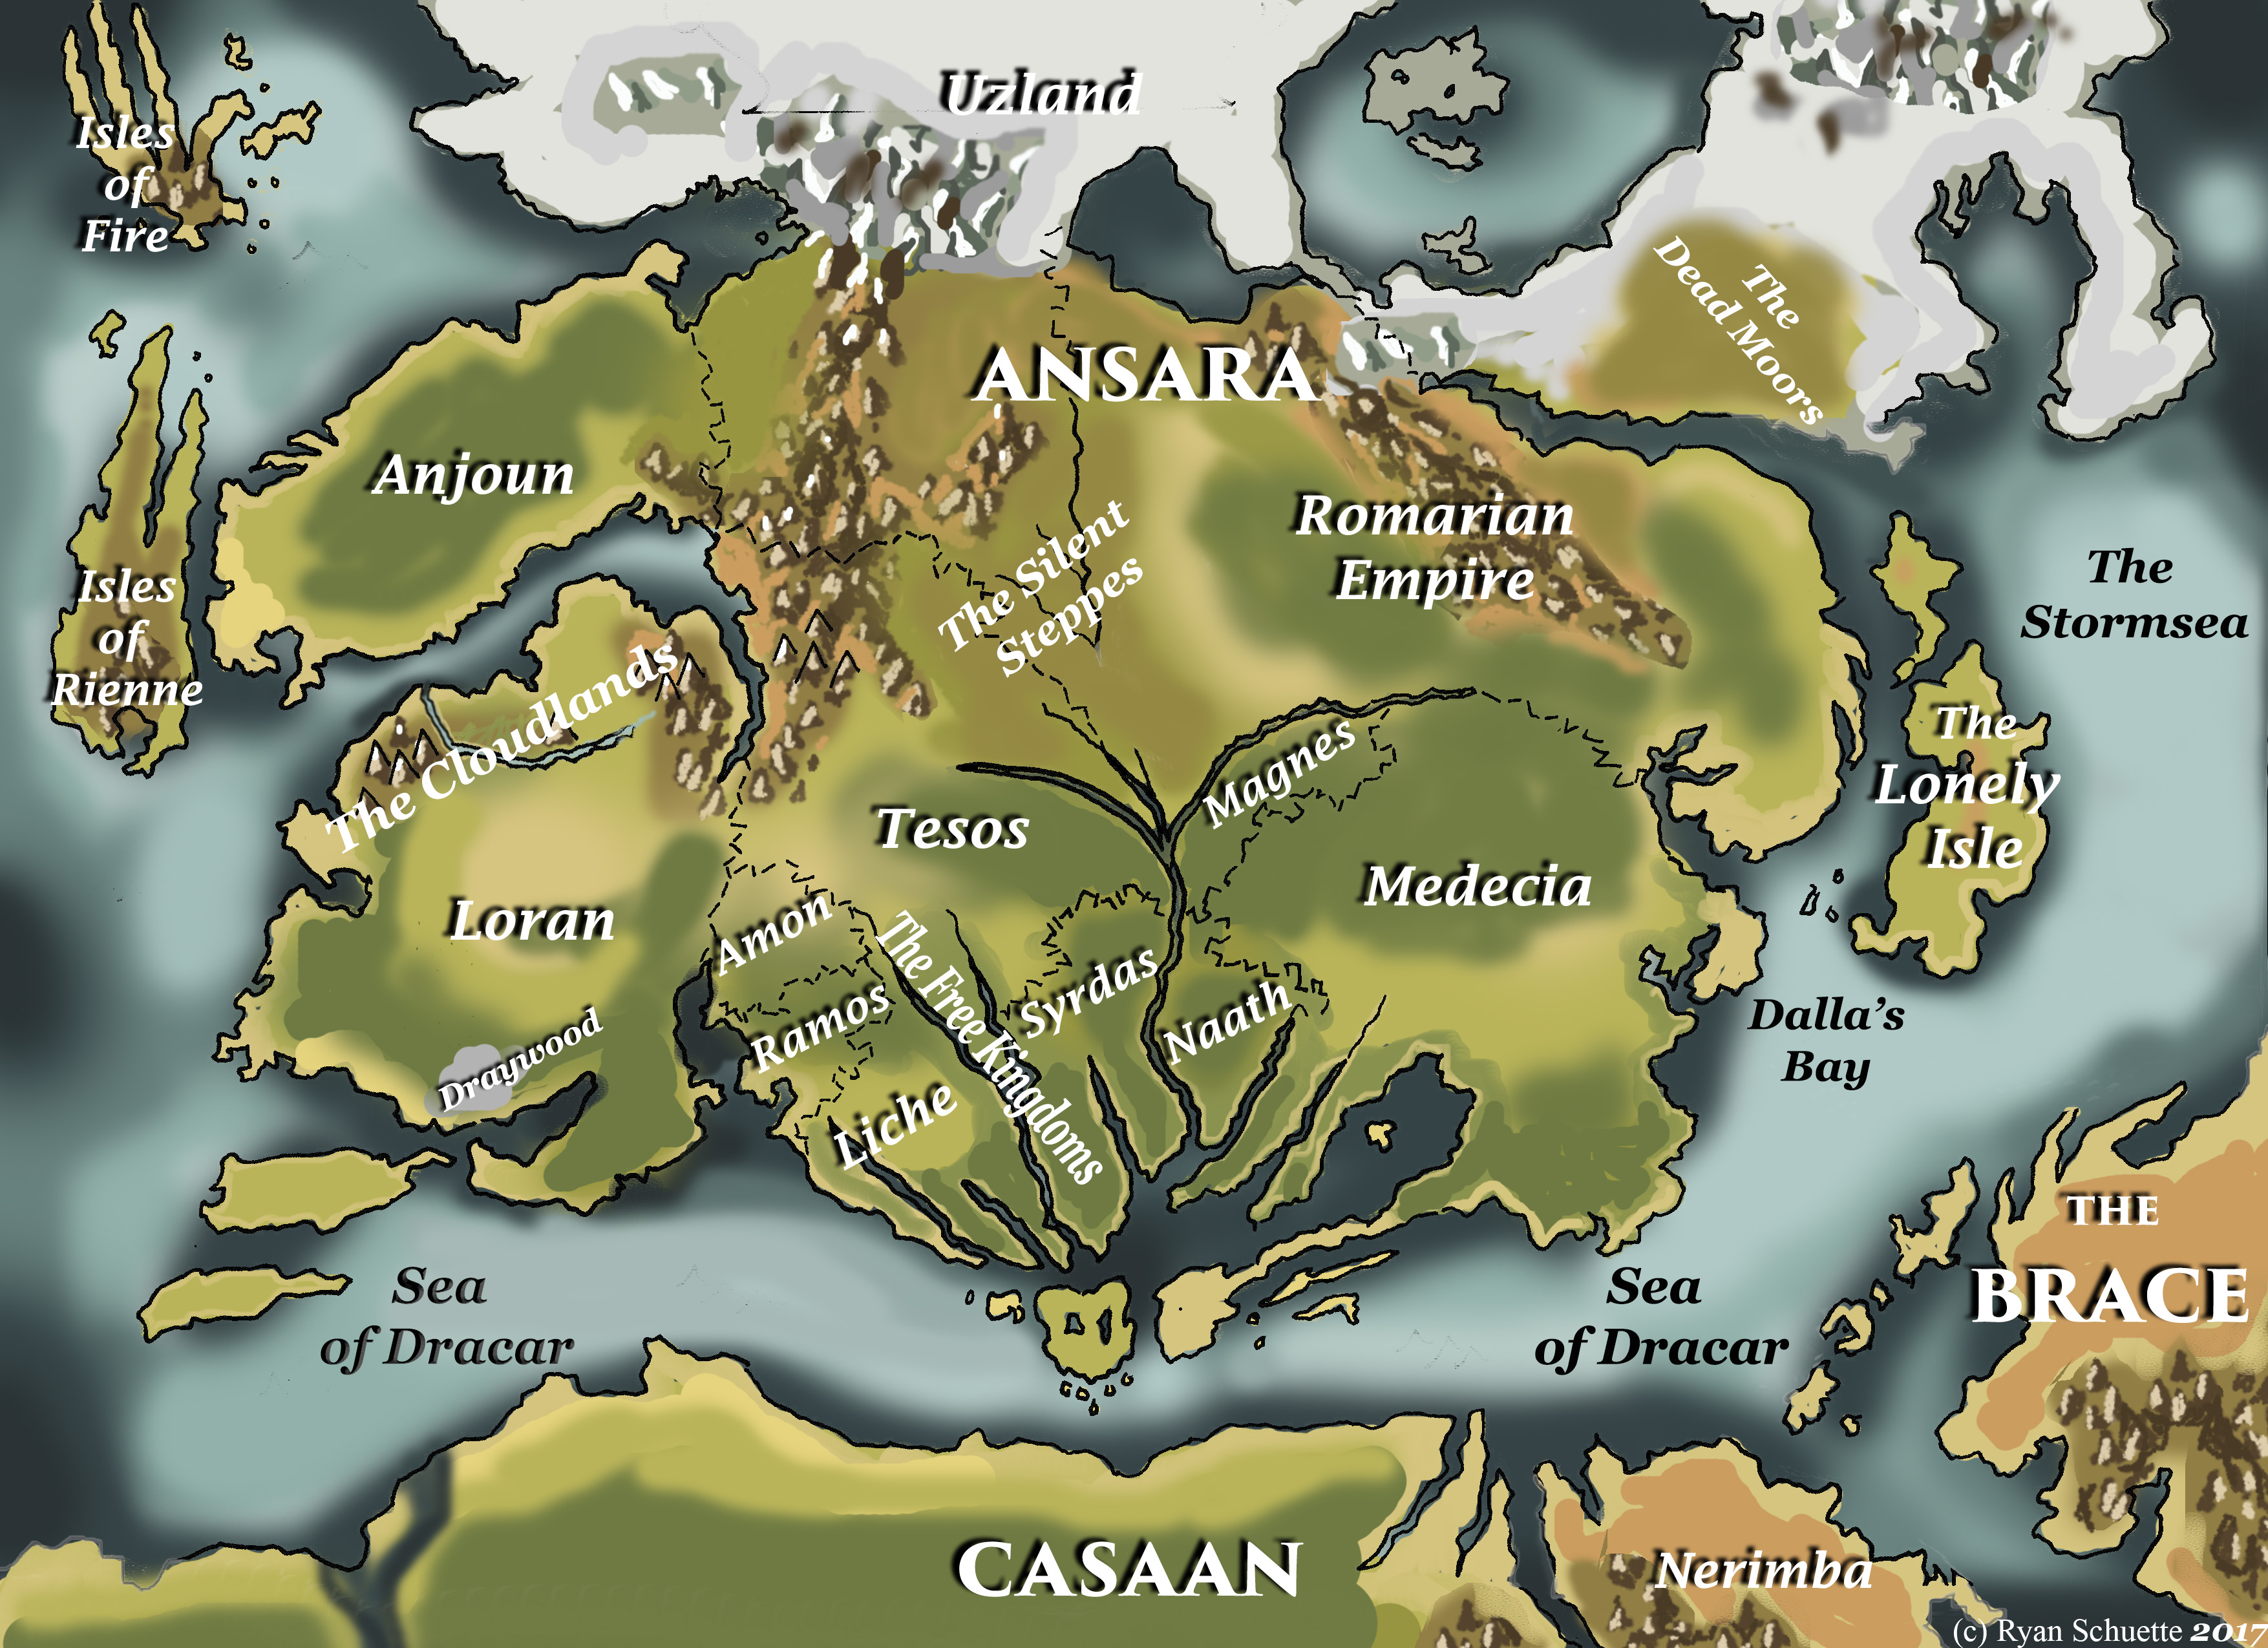 The World of Arna